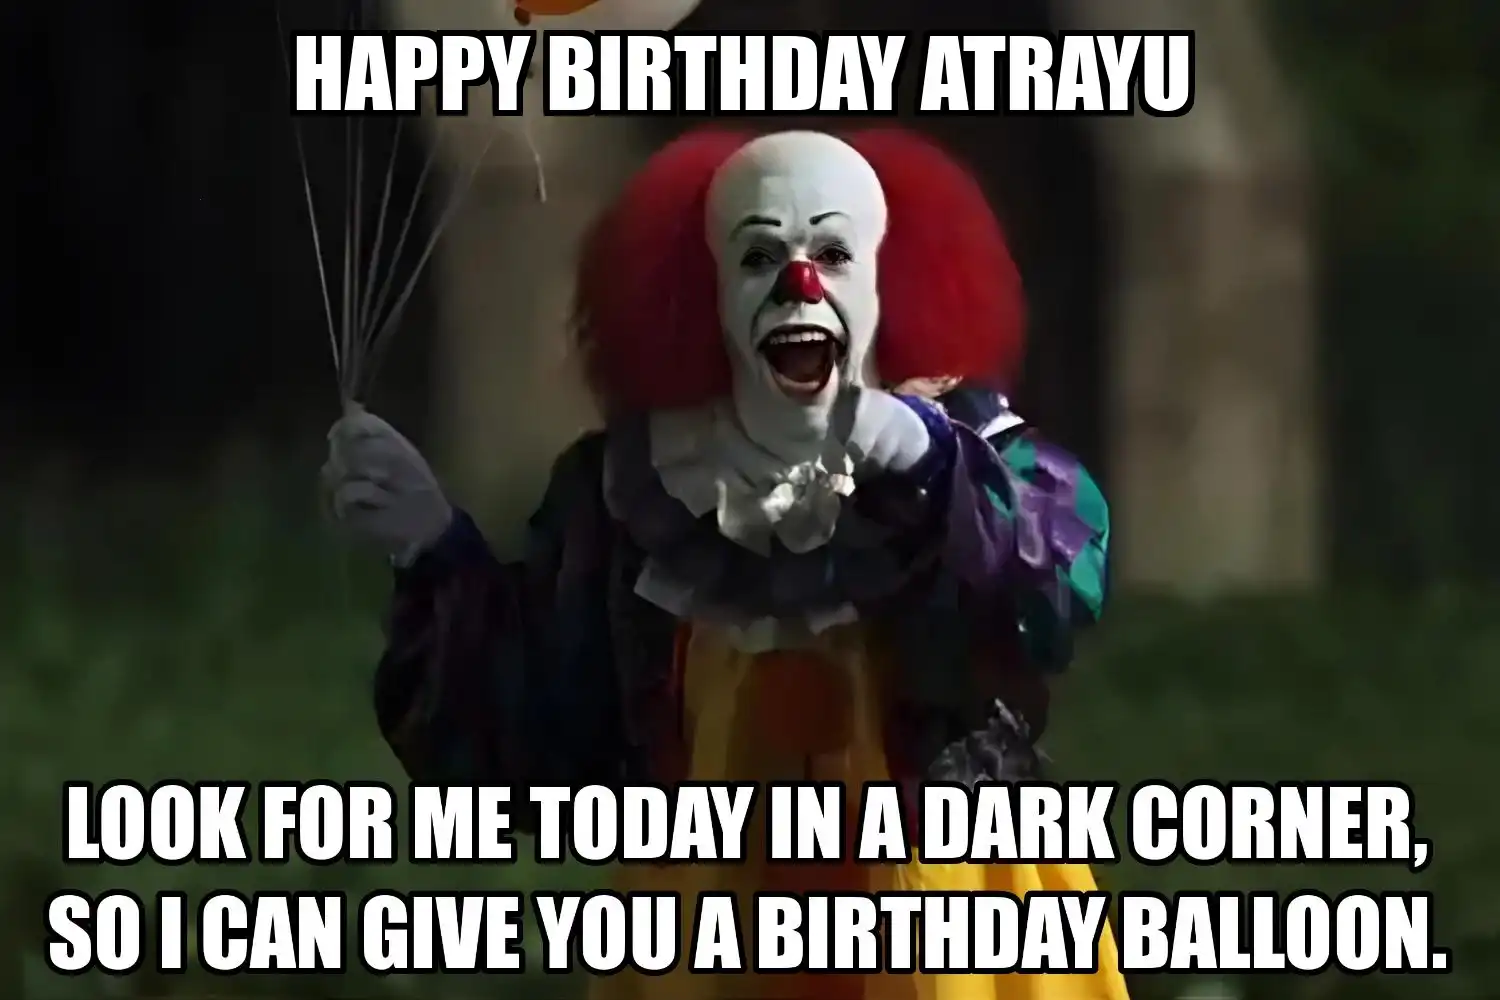 Happy Birthday Atrayu I Can Give You A Balloon Meme